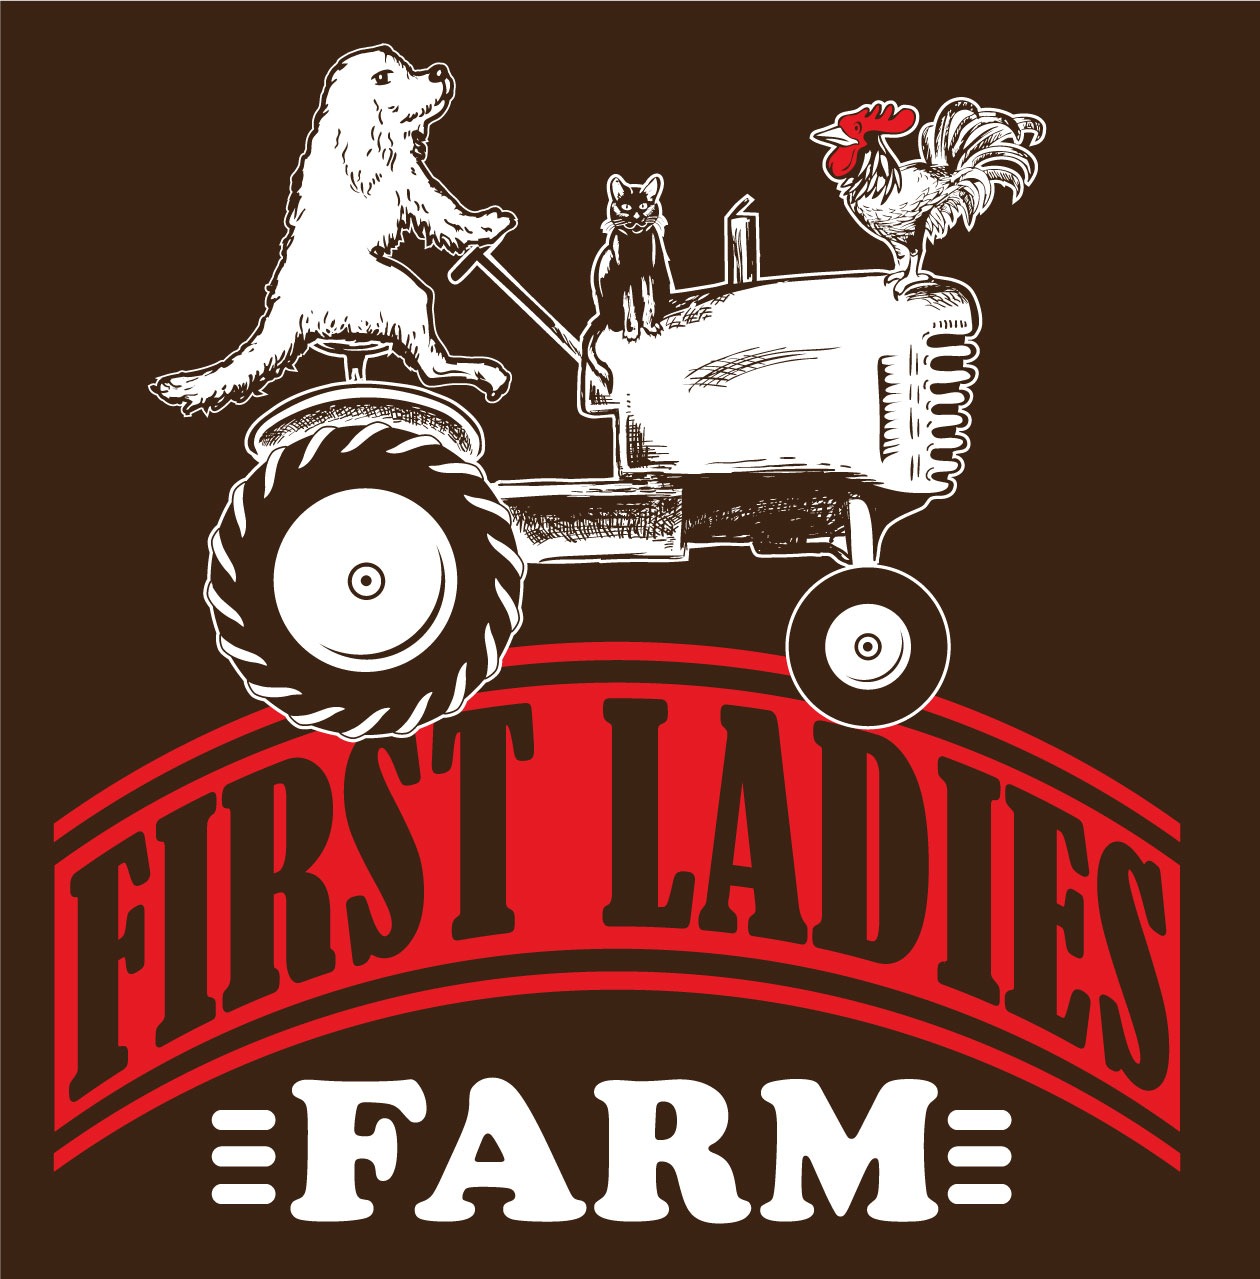 First Ladies Farm